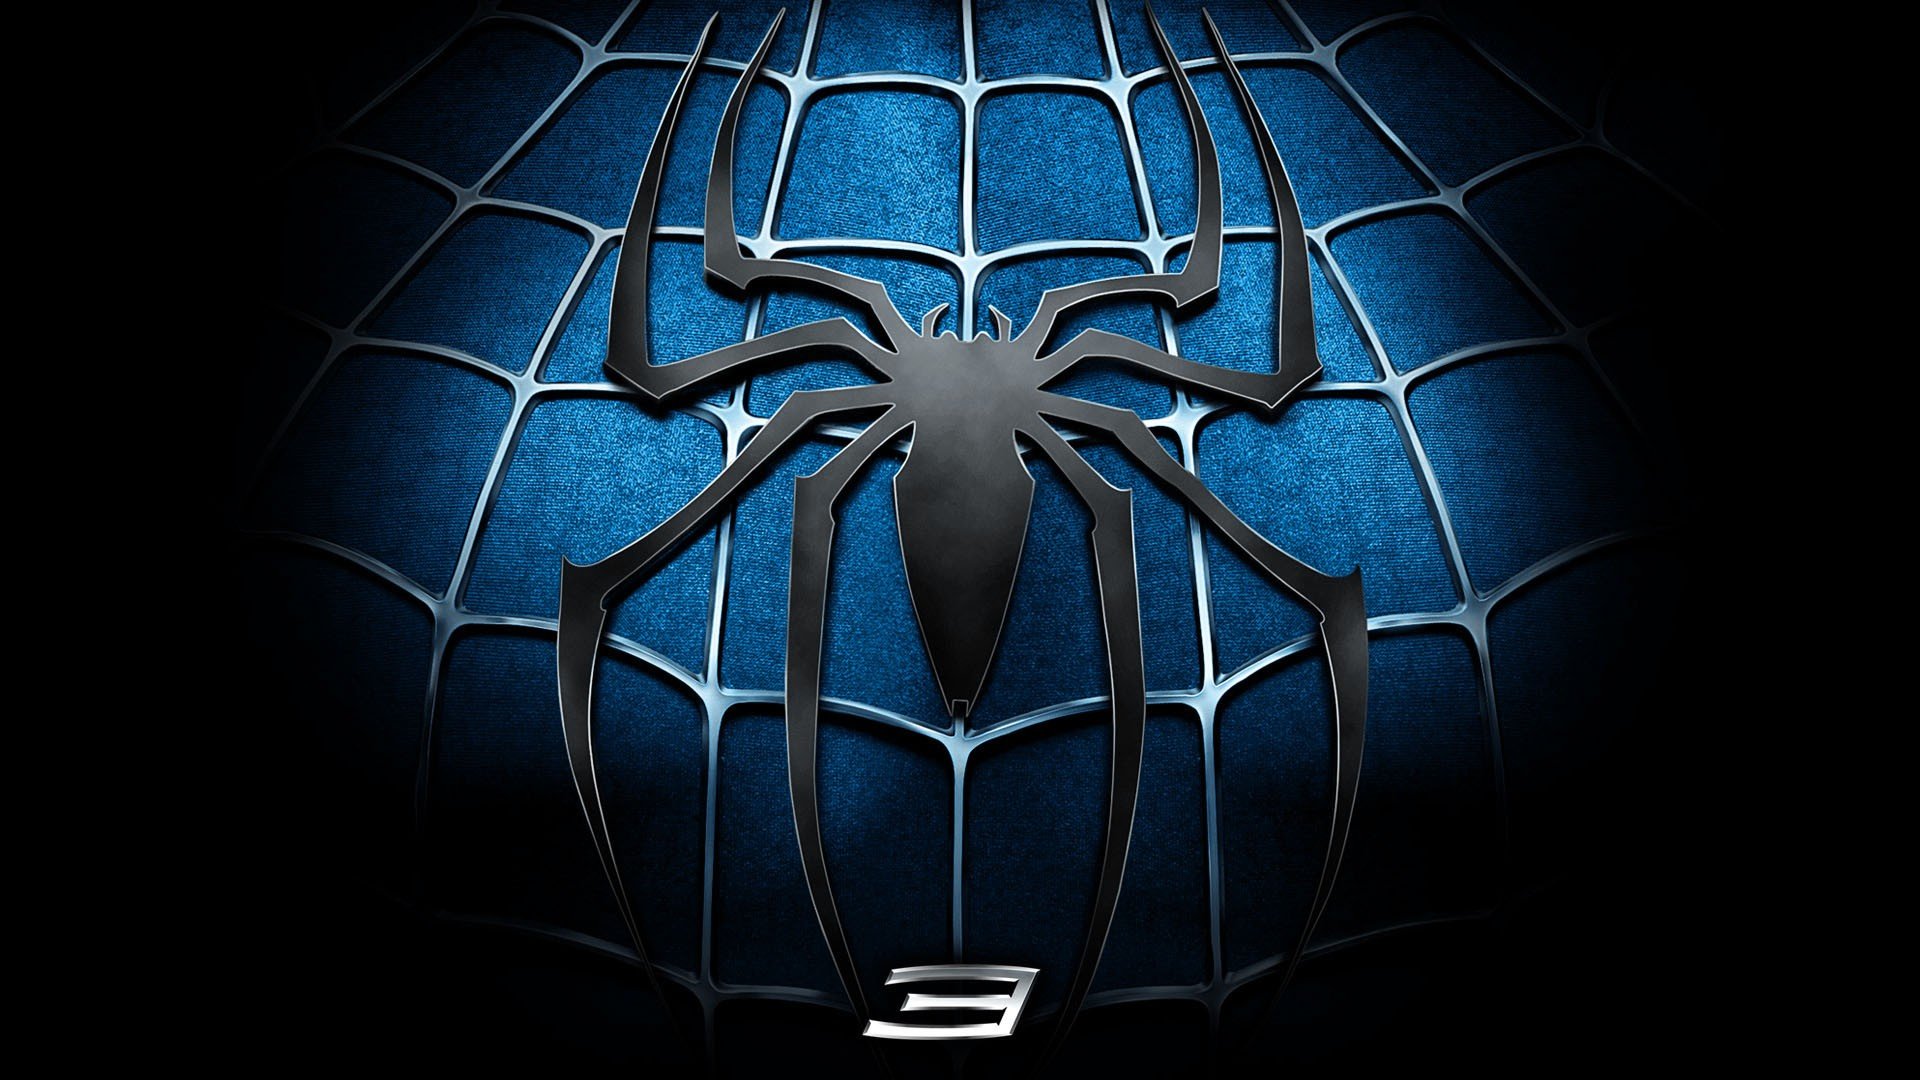 Spiderman 3D Wallpaper – Home Decoram